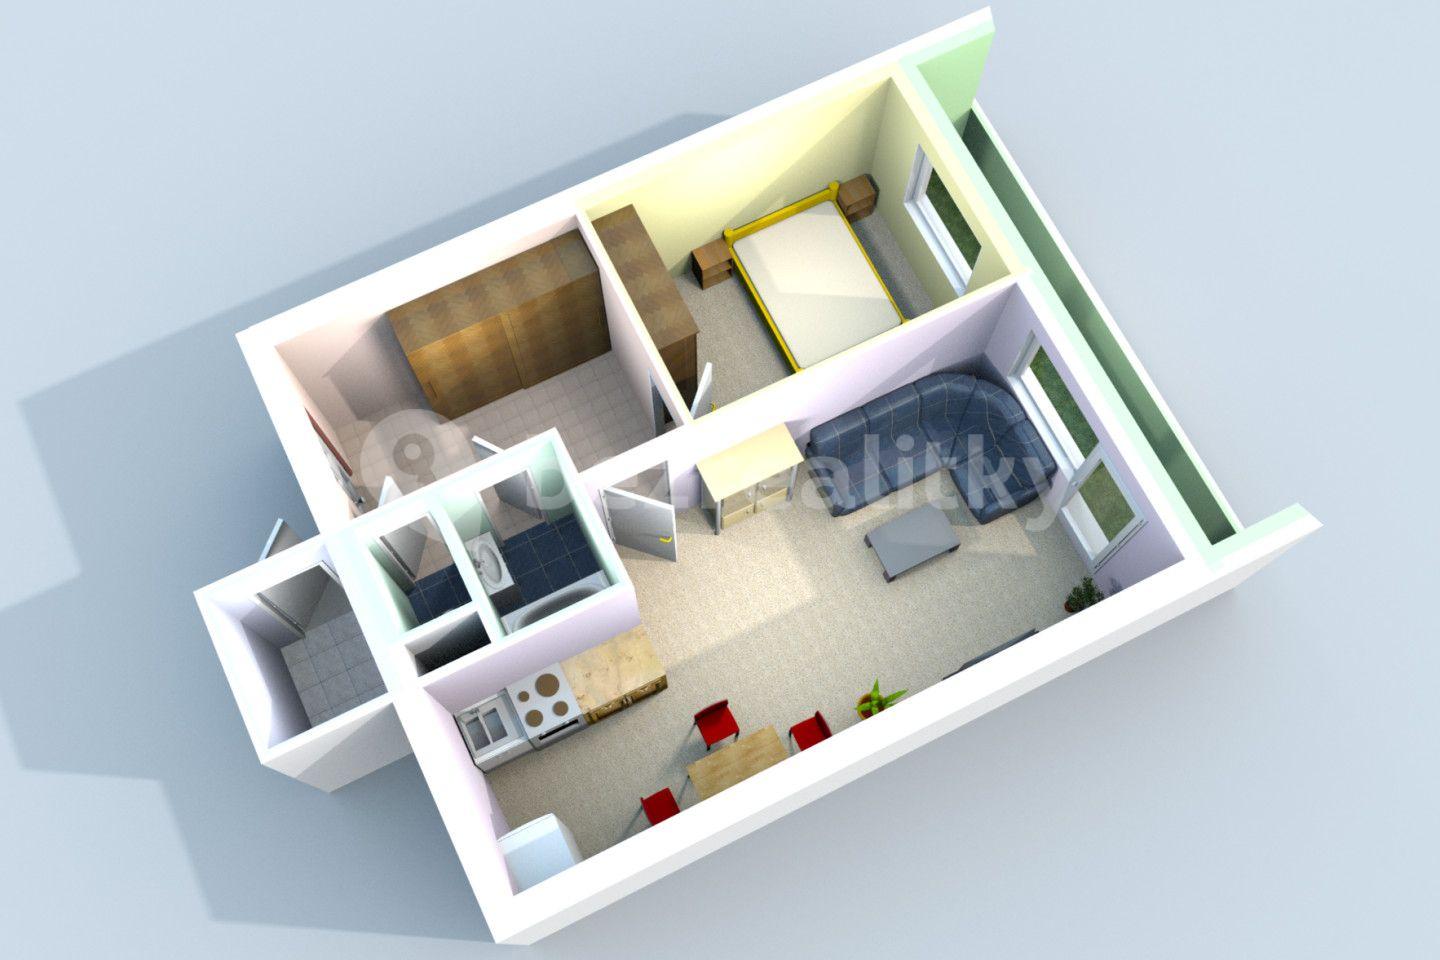 Predaj bytu 2-izbový 42 m², Jana Palacha, Kutná Hora, Středočeský kraj